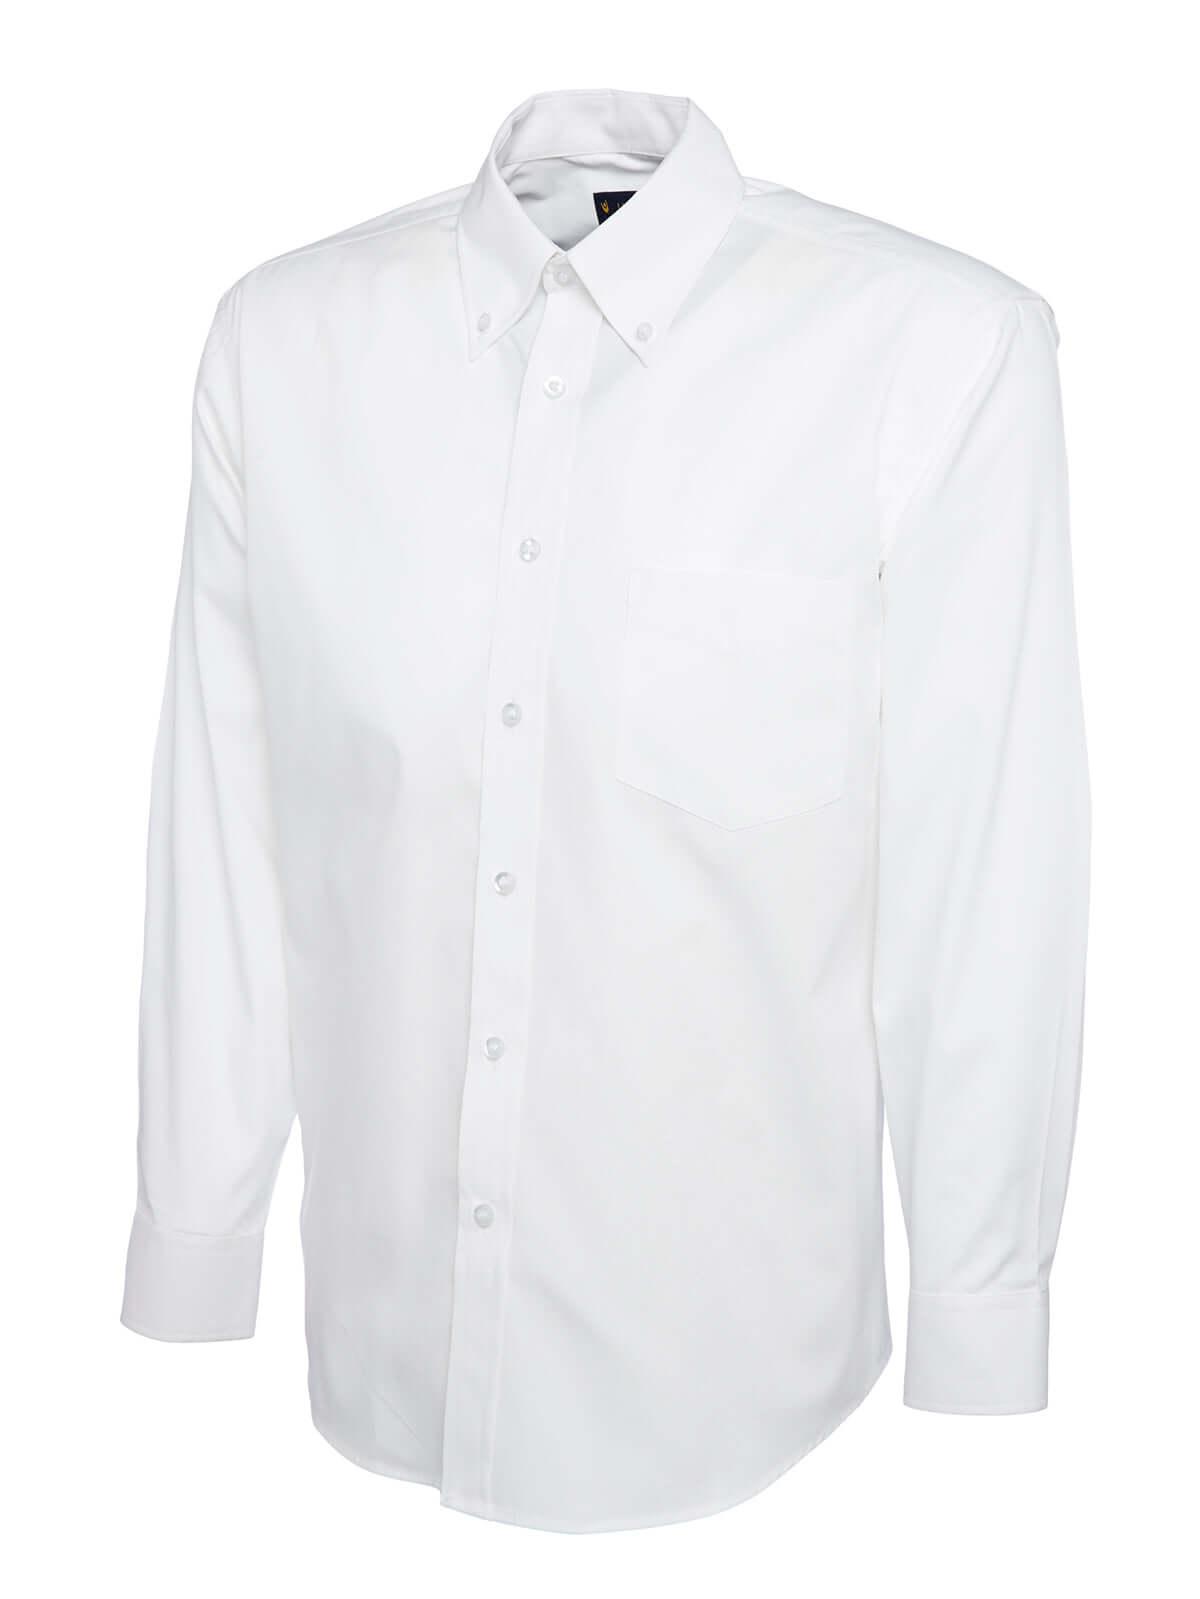 Pegasus Uniform Mens Pinpoint Oxford Long Sleeve Shirt - White